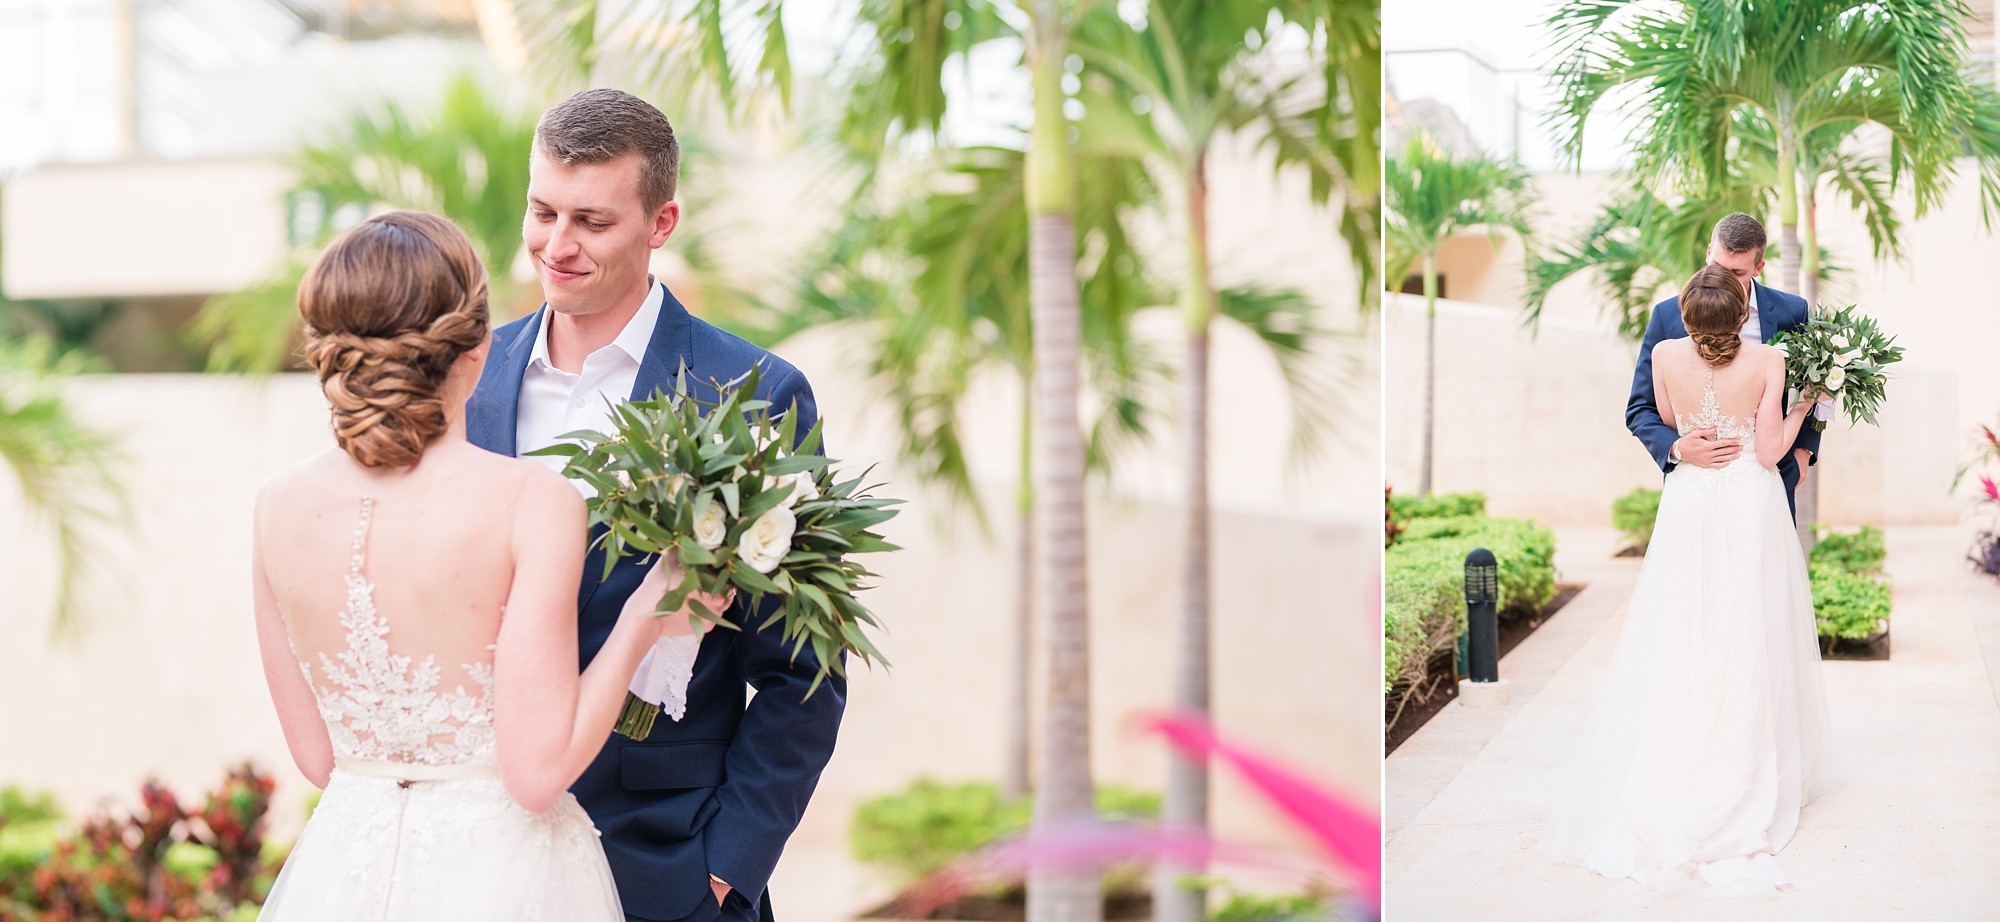 Dallas Destination Wedding Photography in Cancun Mexico